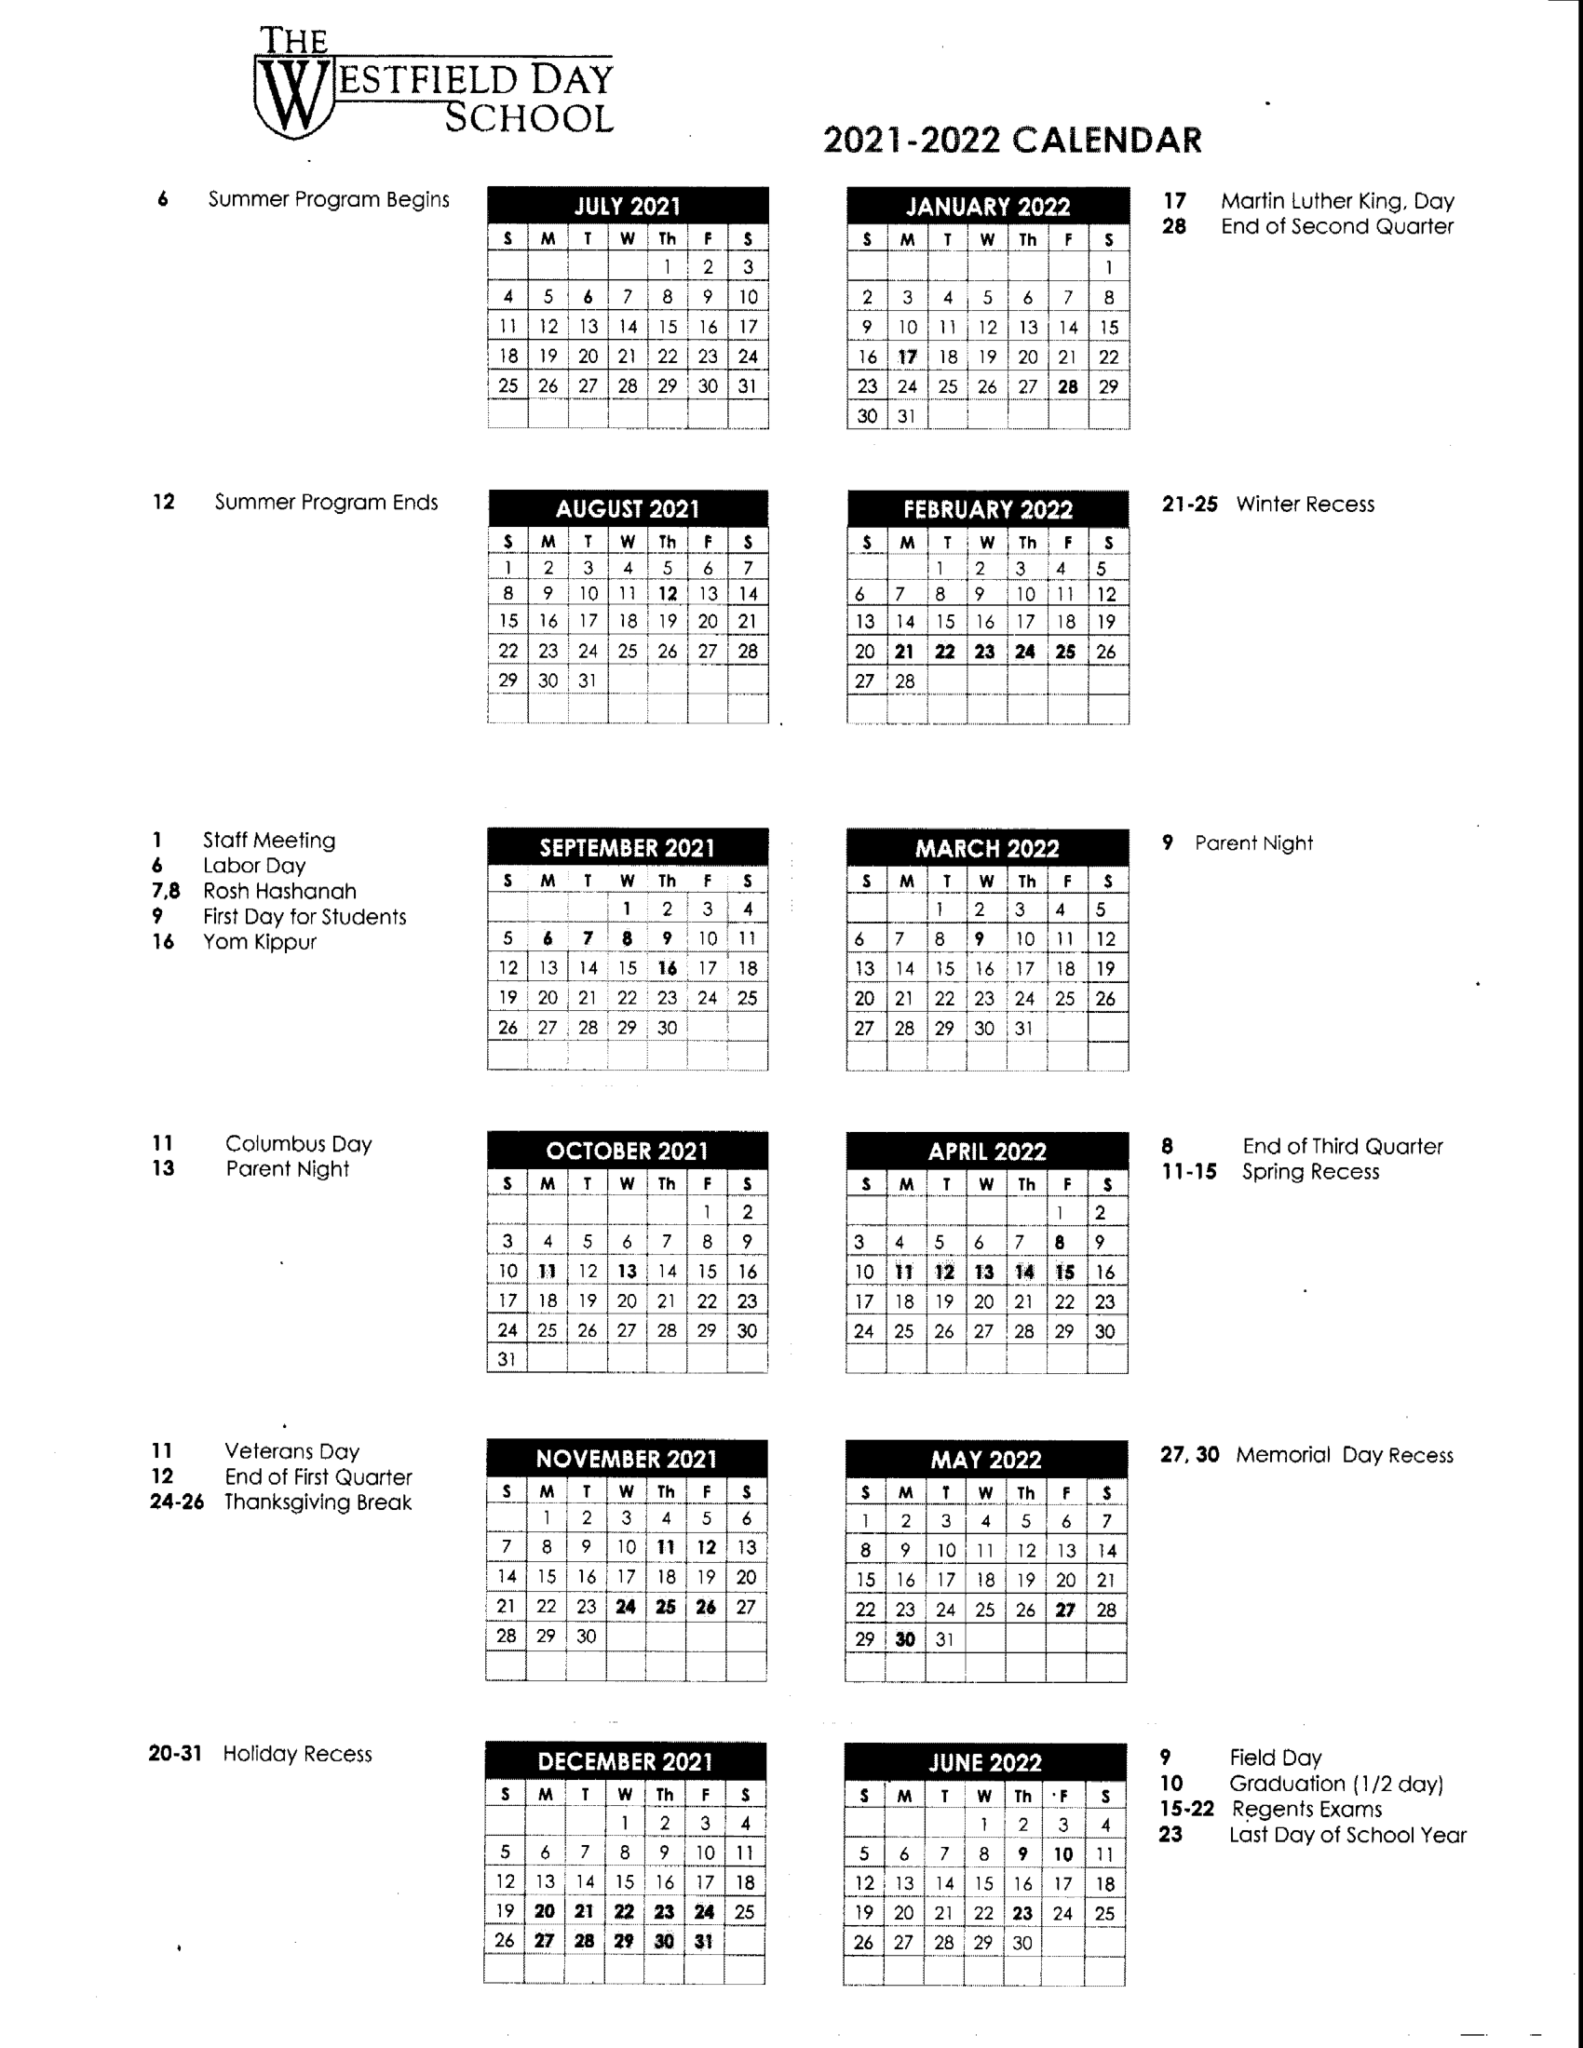 School Calendar – The Westfield Day School